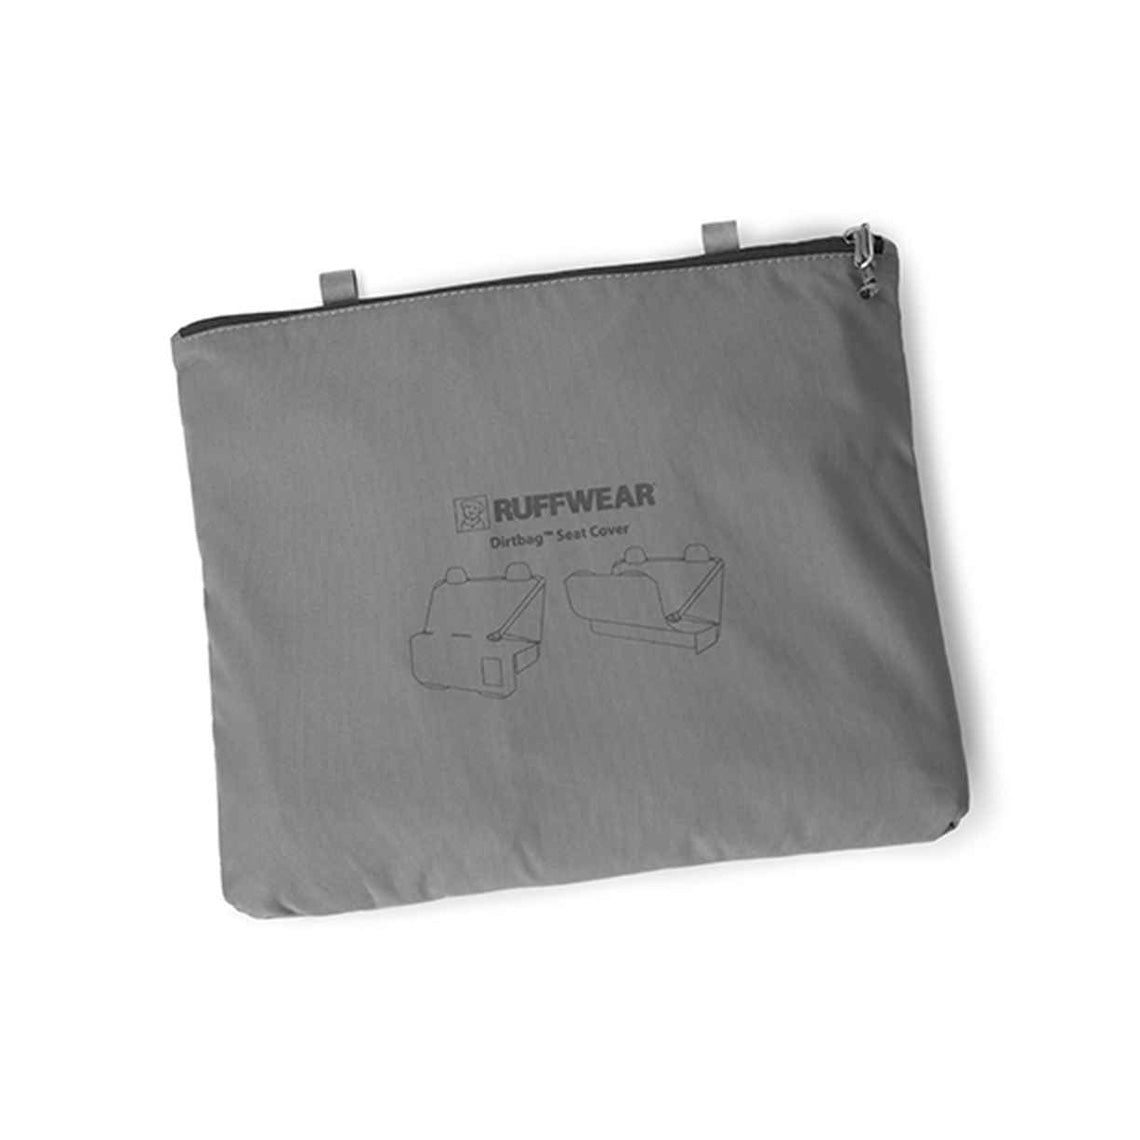 Ruffwear Dirt Bag Vehicle Seat Cover (SS)